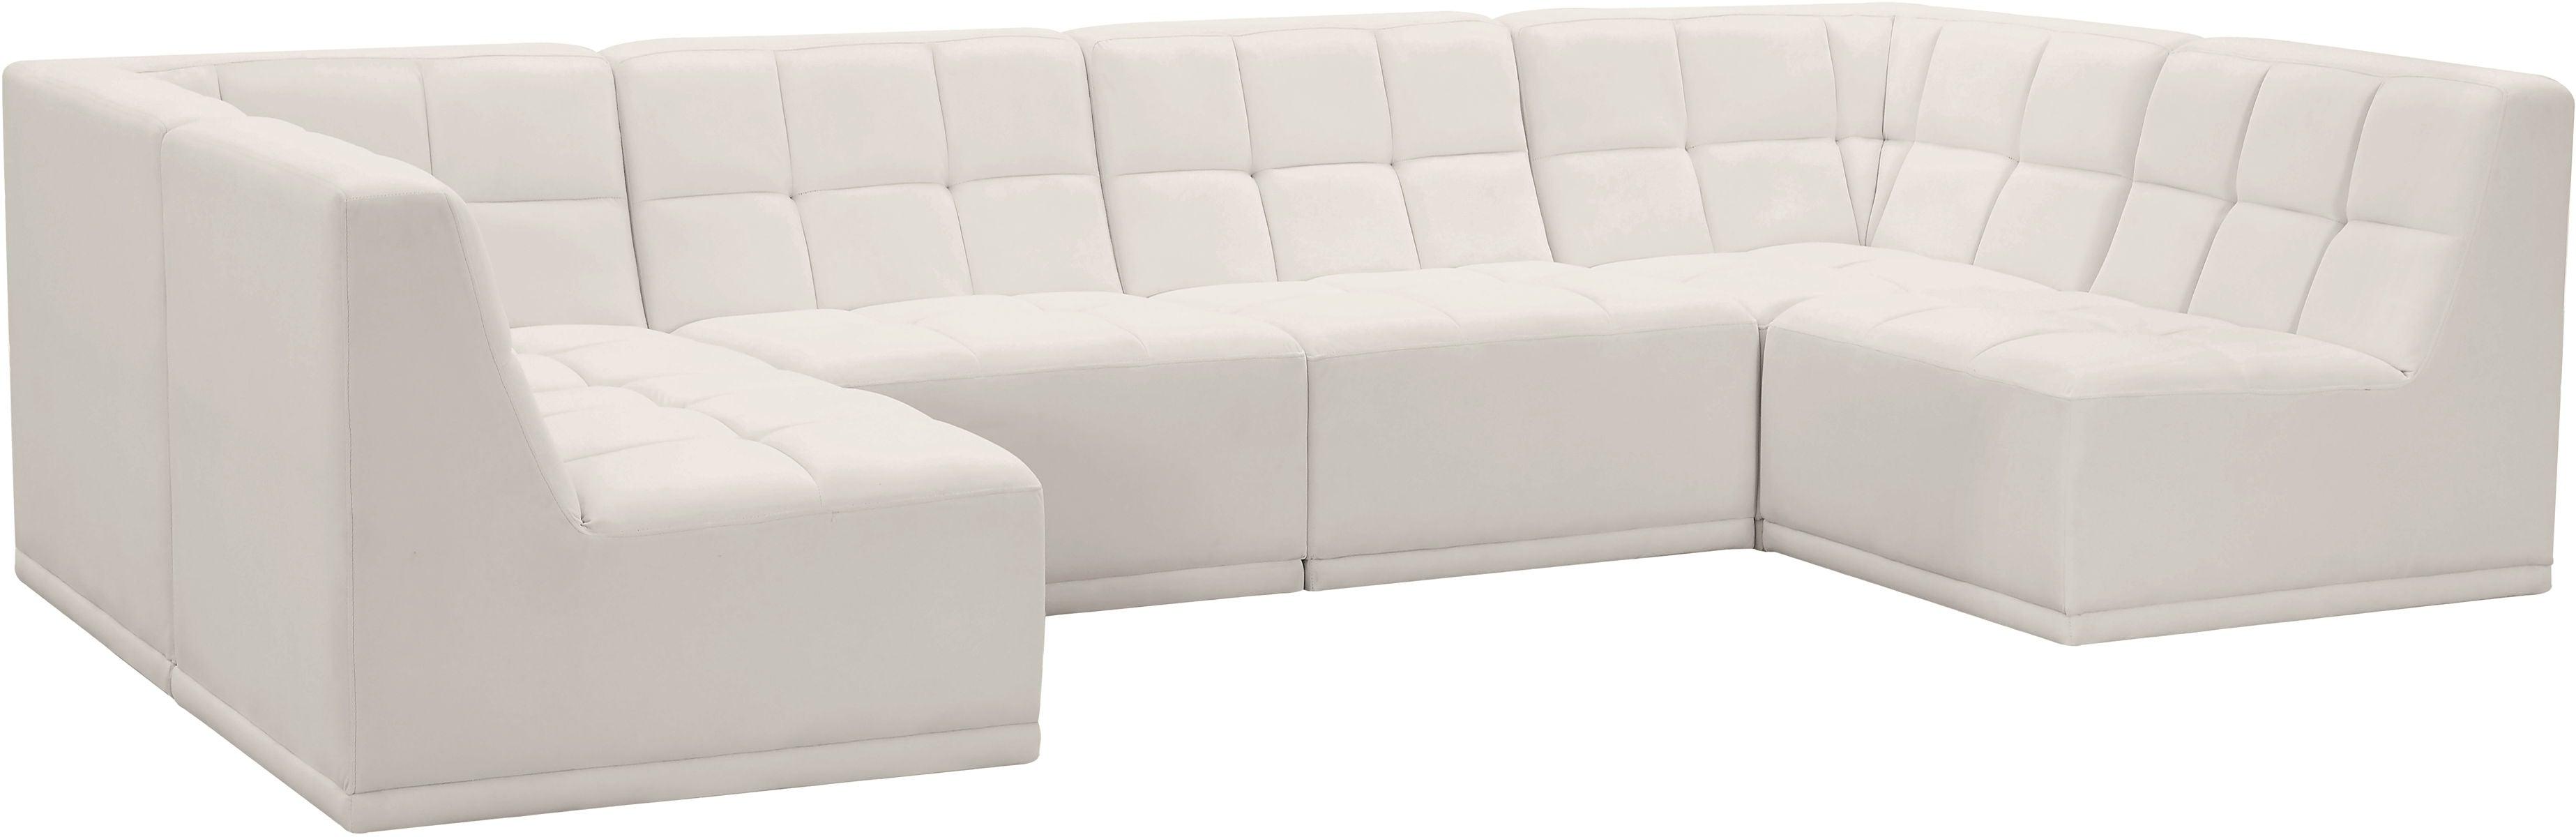 Meridian Furniture - Relax - Modular Sectional 6 Piece - Cream - 5th Avenue Furniture